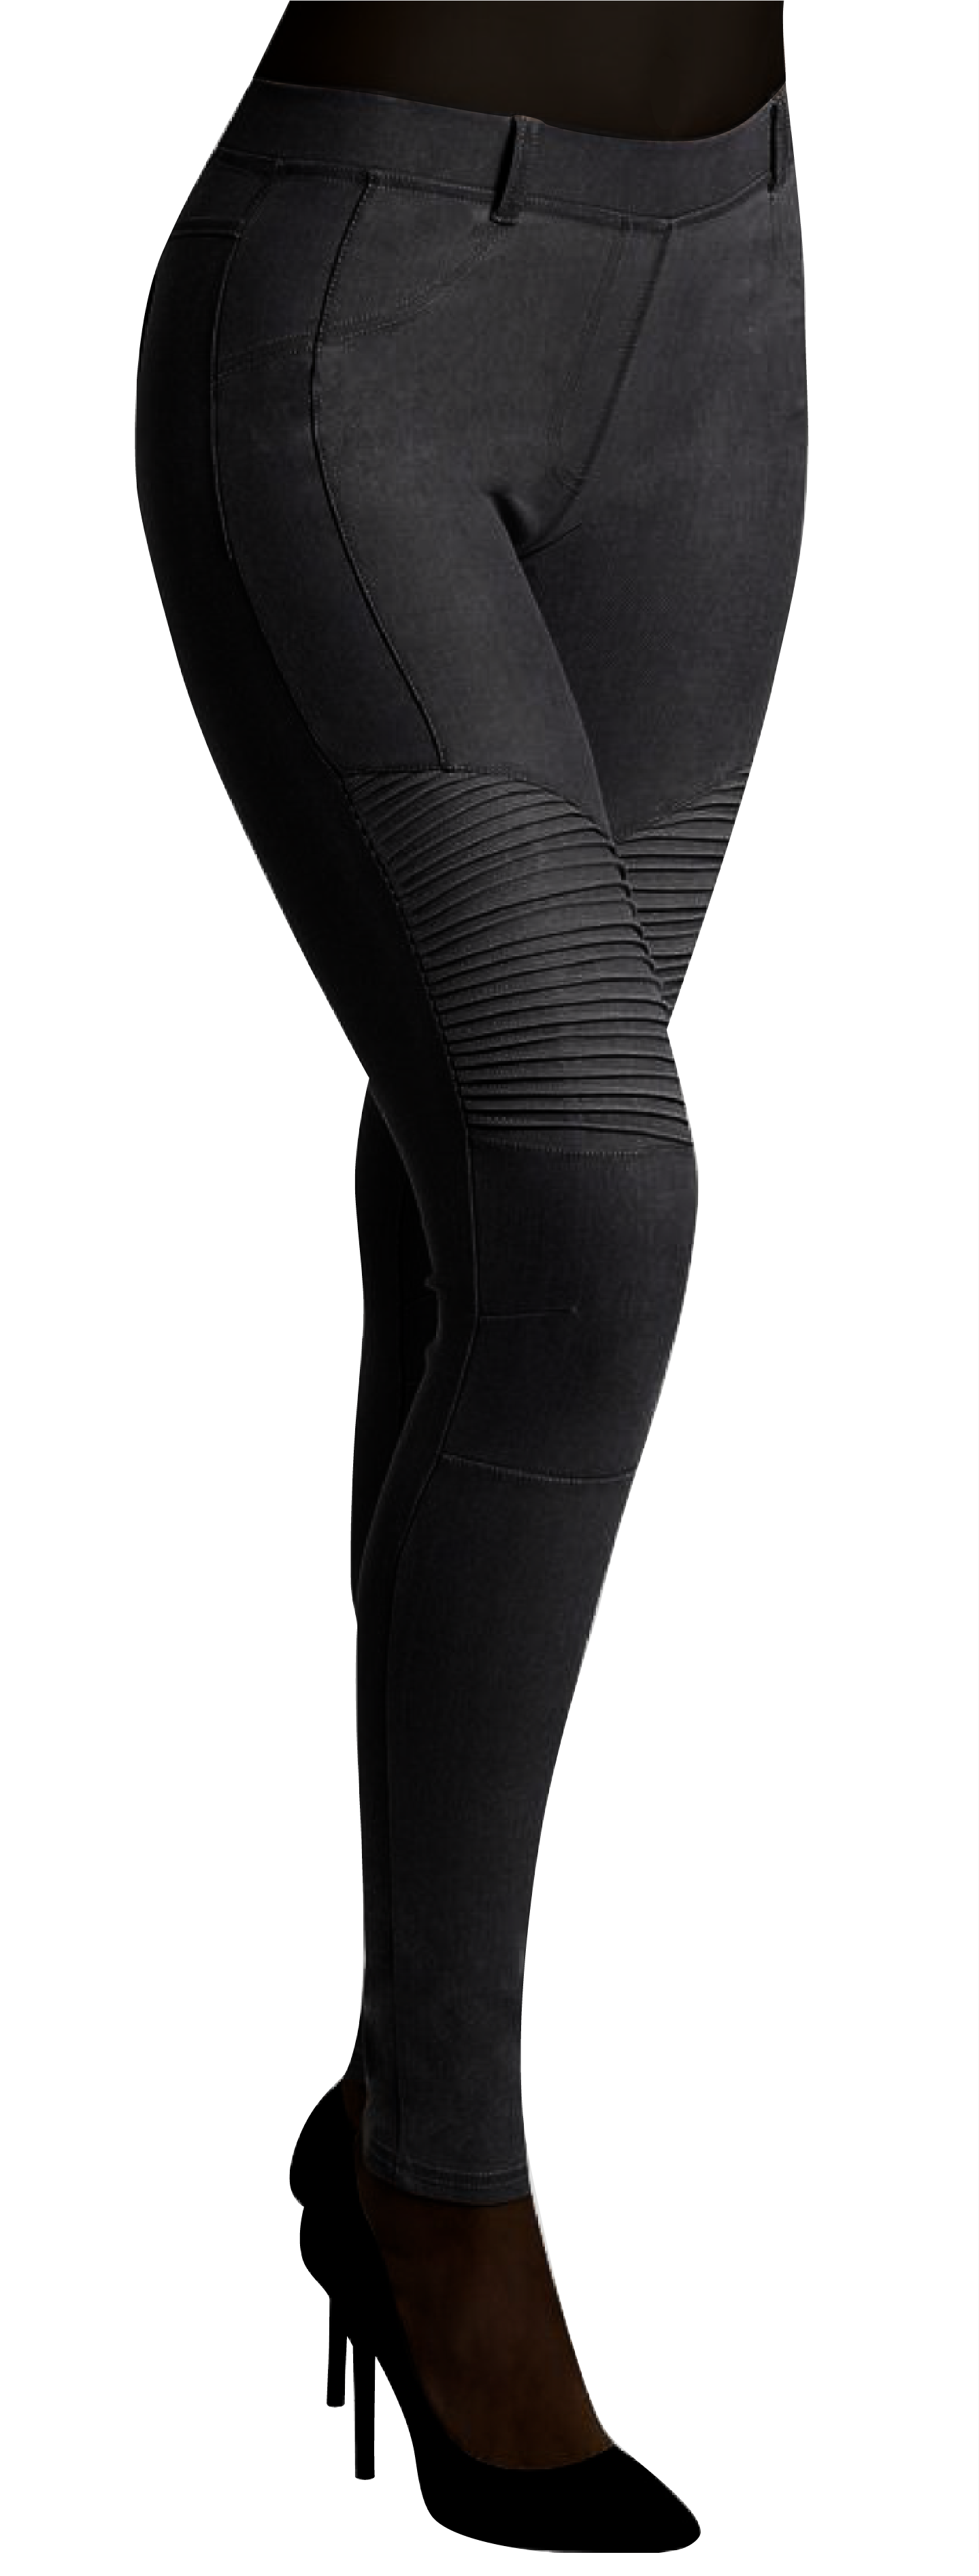 Ysabel Mora 70238 Biker Style Jeggings - black denim cotton stretch jean leggings with ribbed panelling at the knee.